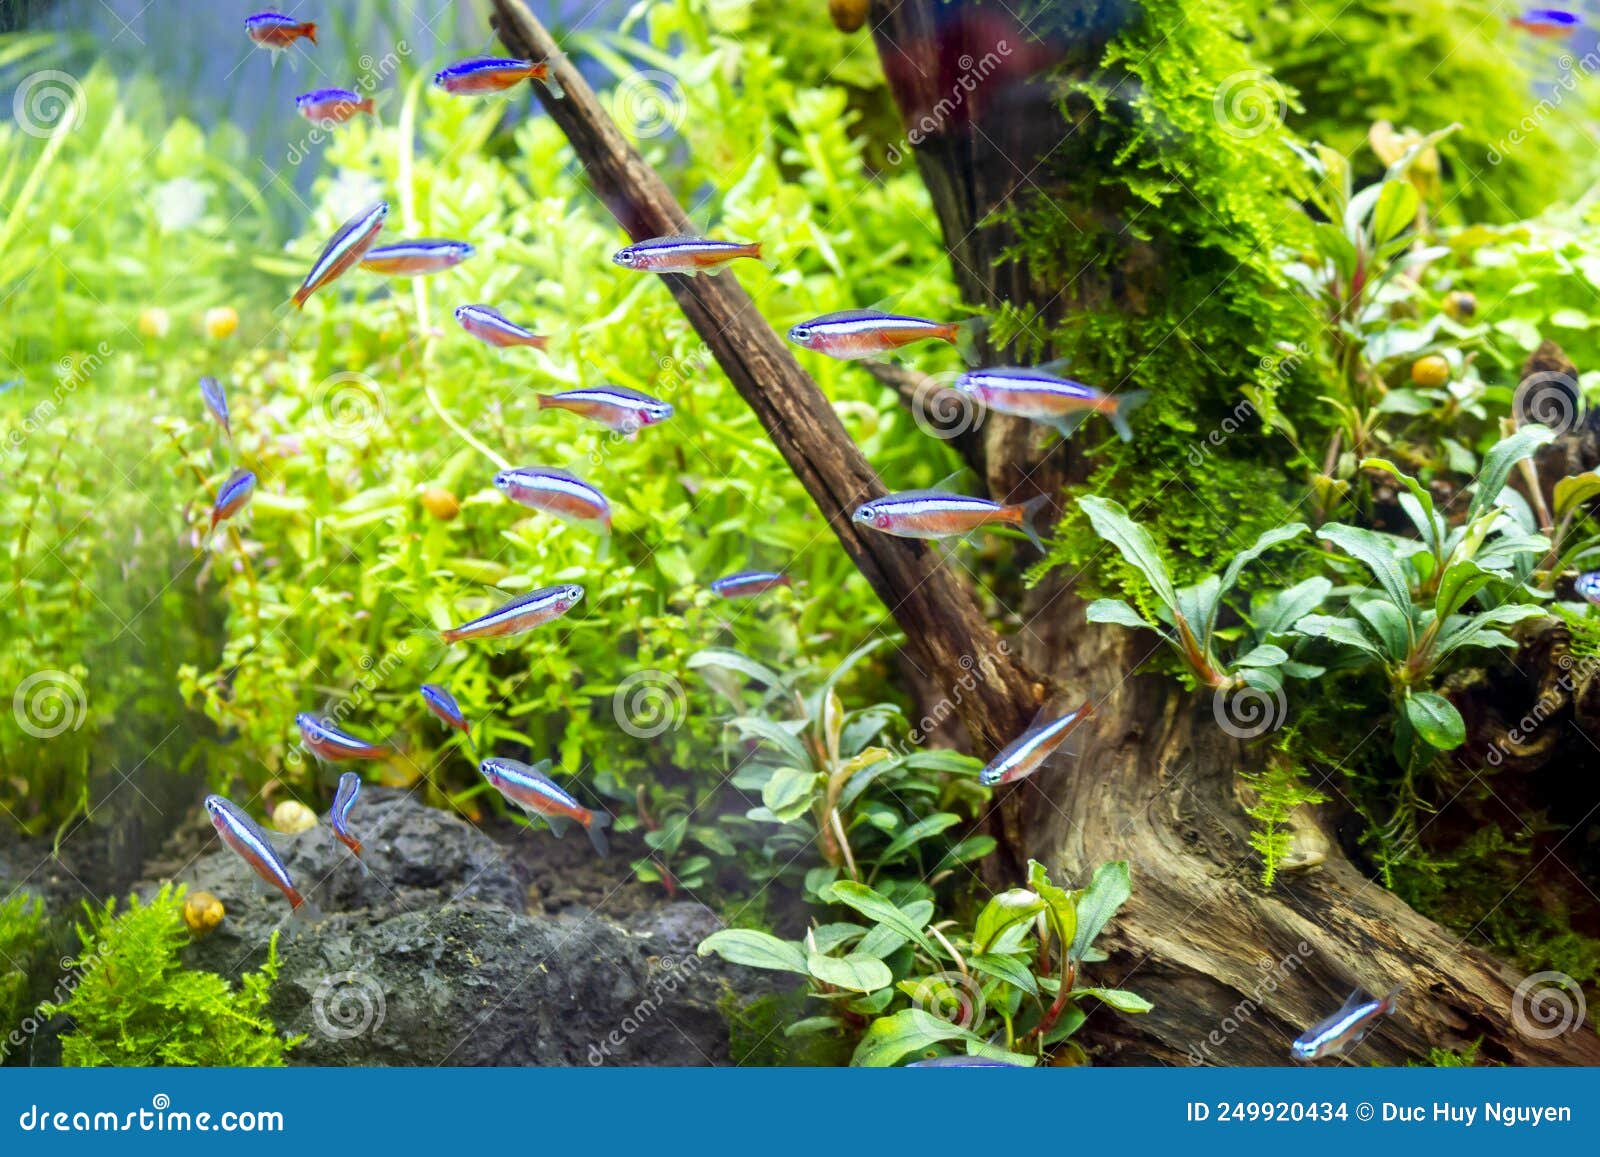 beautiful natural aquarium aquascape with rock, driftwood and ornamental fish.